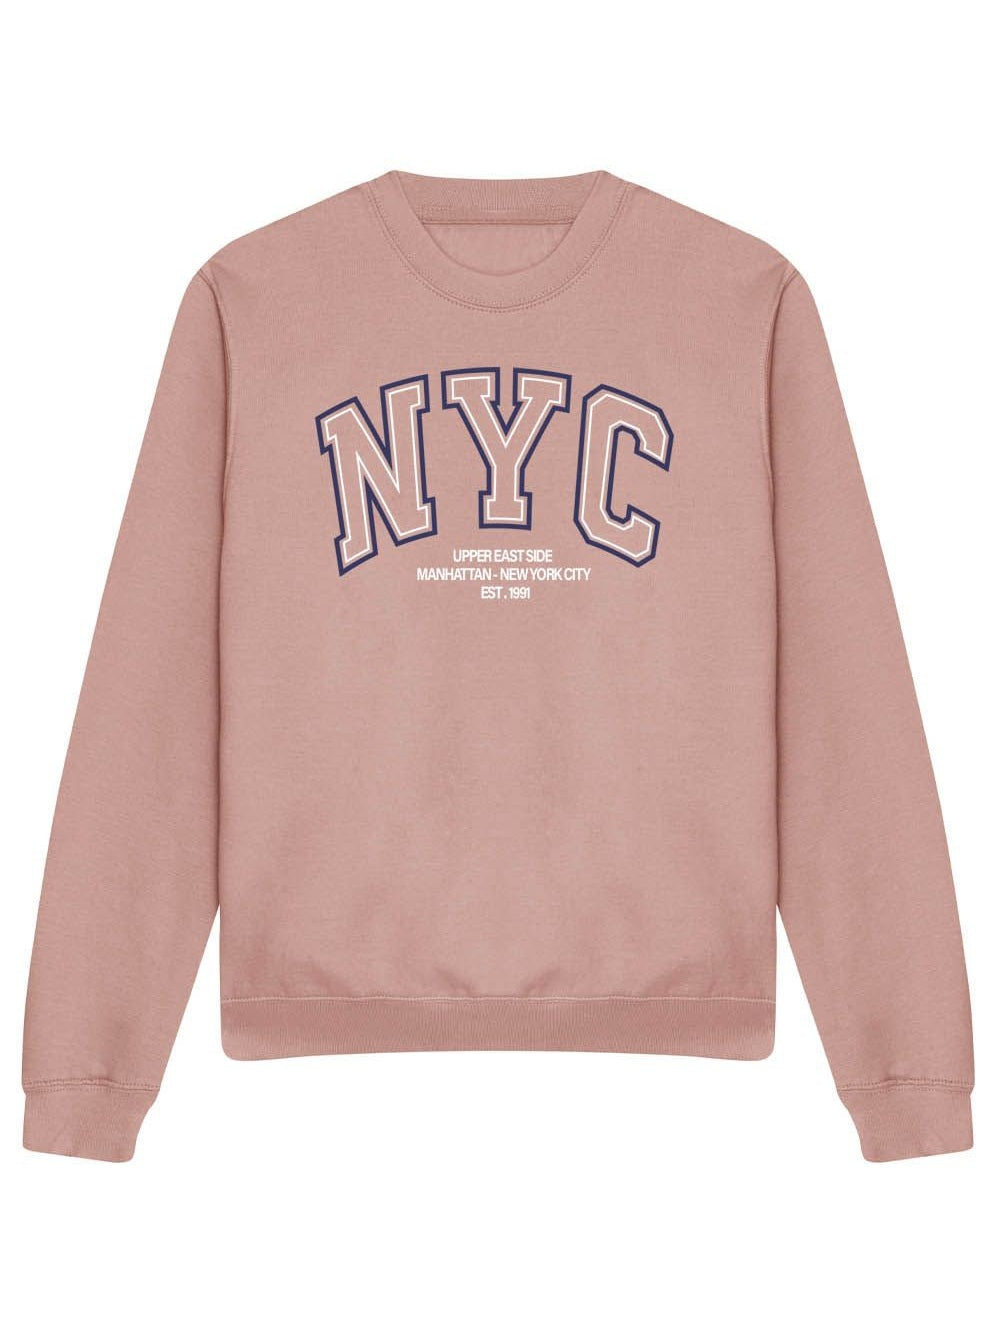 NYC Oversized Sweatshirt In Blush